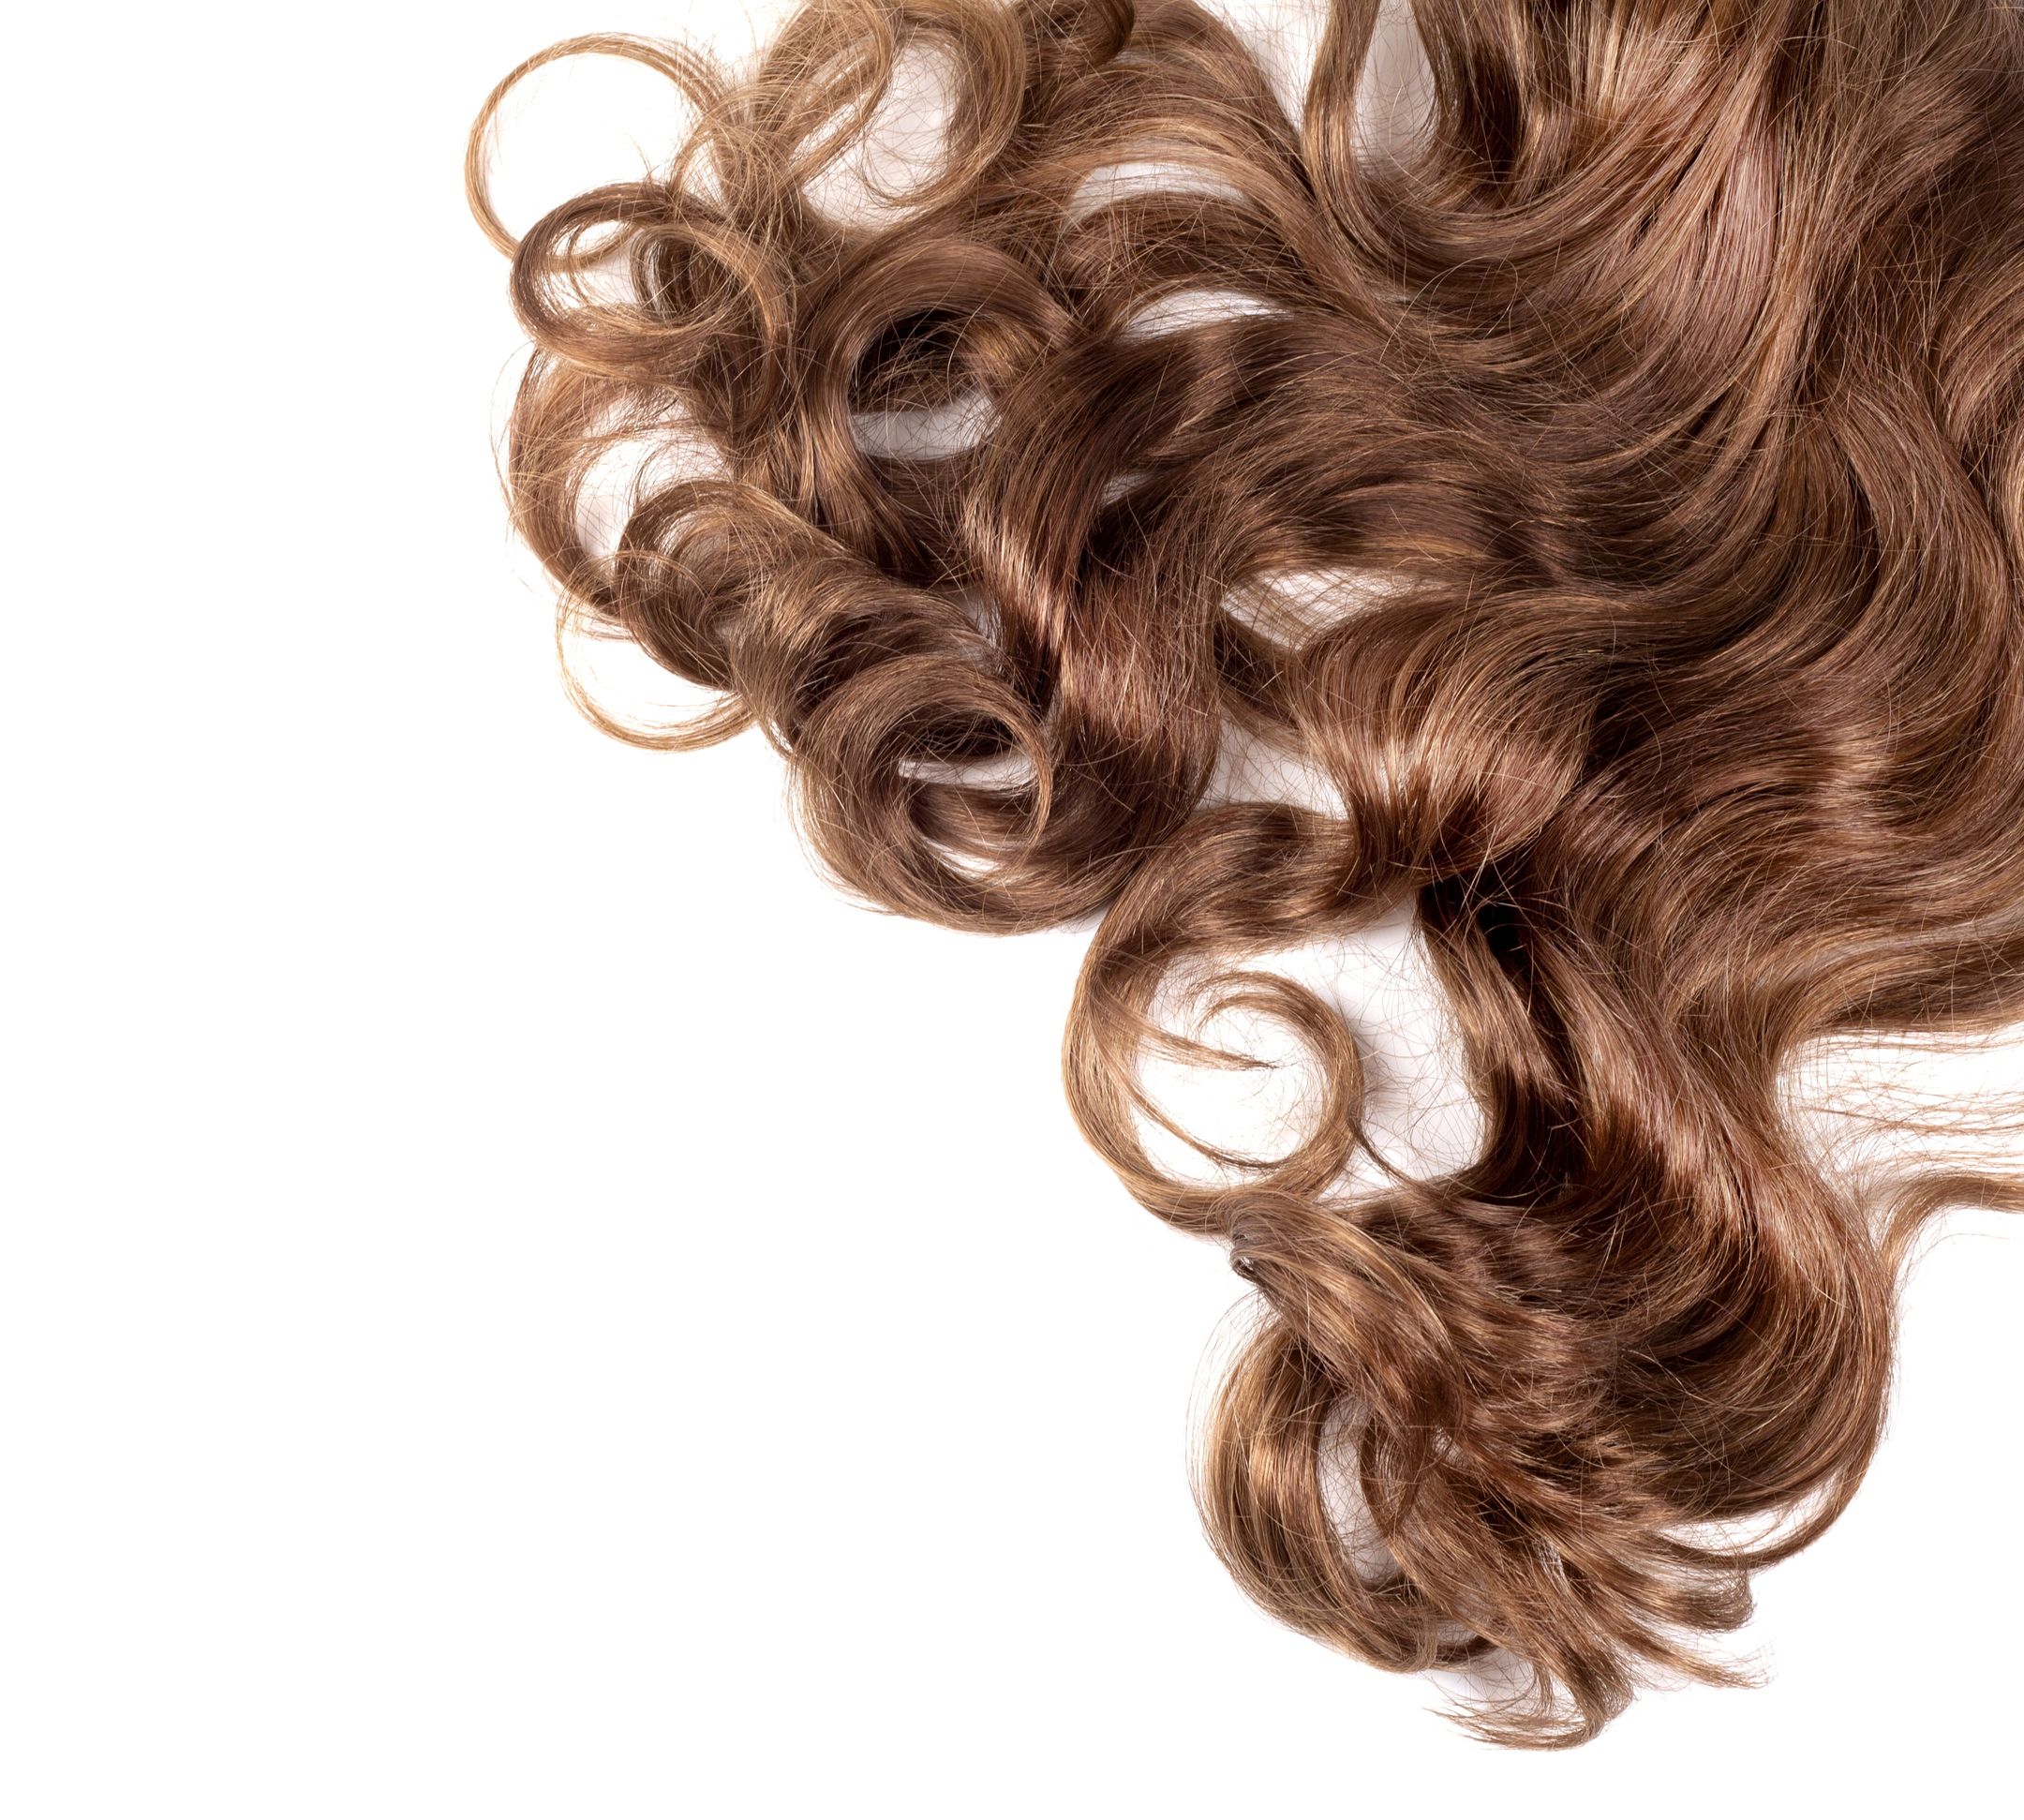 Why Use Hemp Seed Oil For Hair